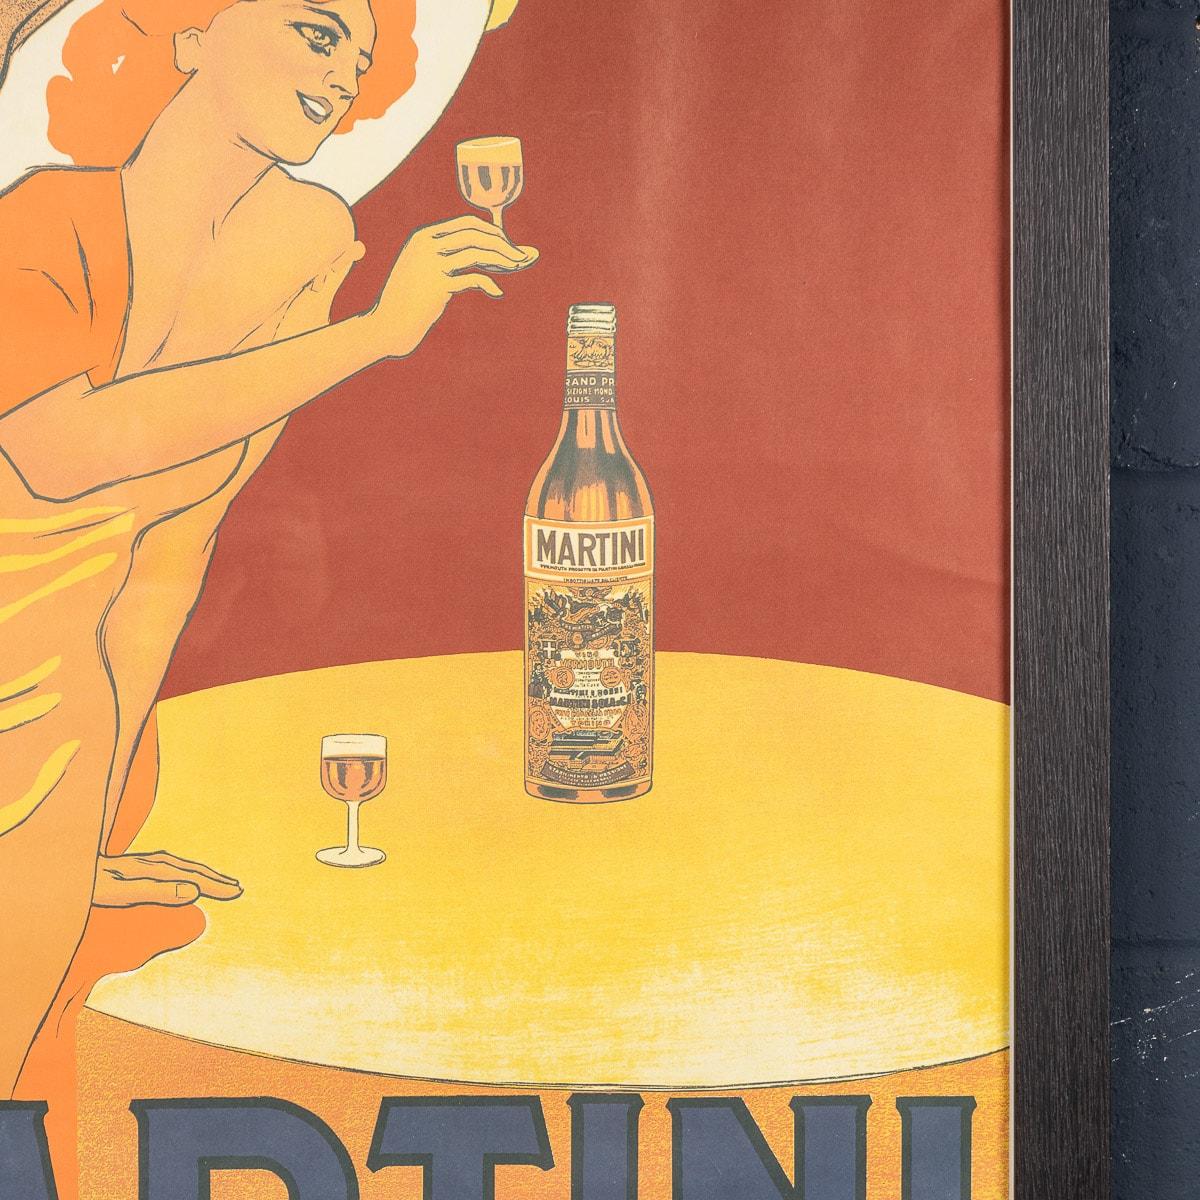 Gerahmtes Werbeplakat für Martini, Italien, um 1970 (Papier)